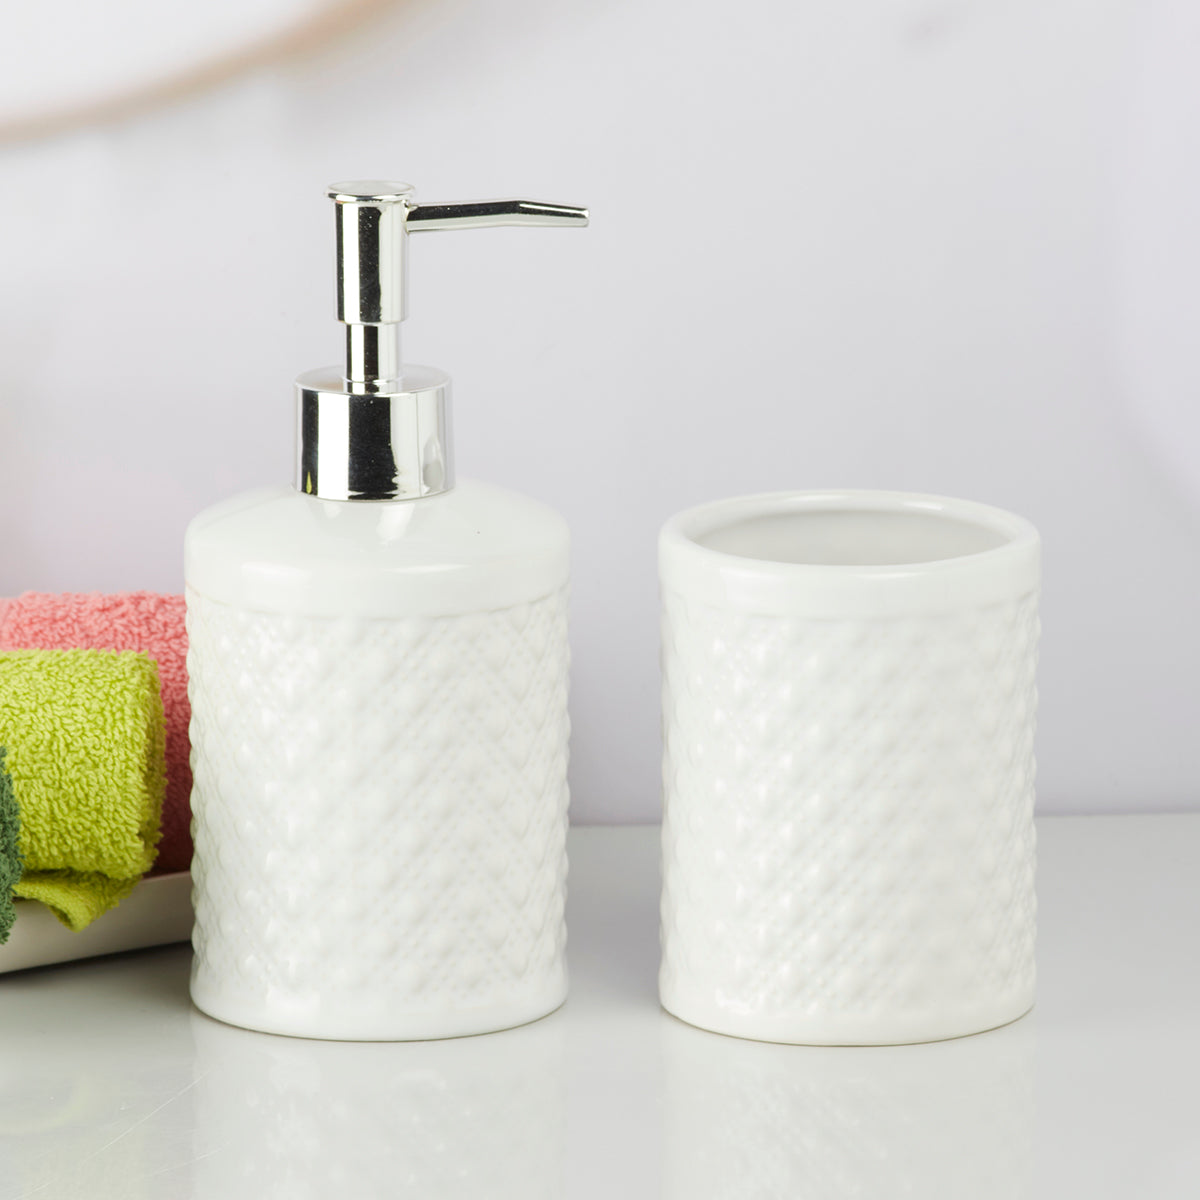 Ceramic Bathroom Accessories Set of 2 Bath Set with Soap Dispenser (9604)